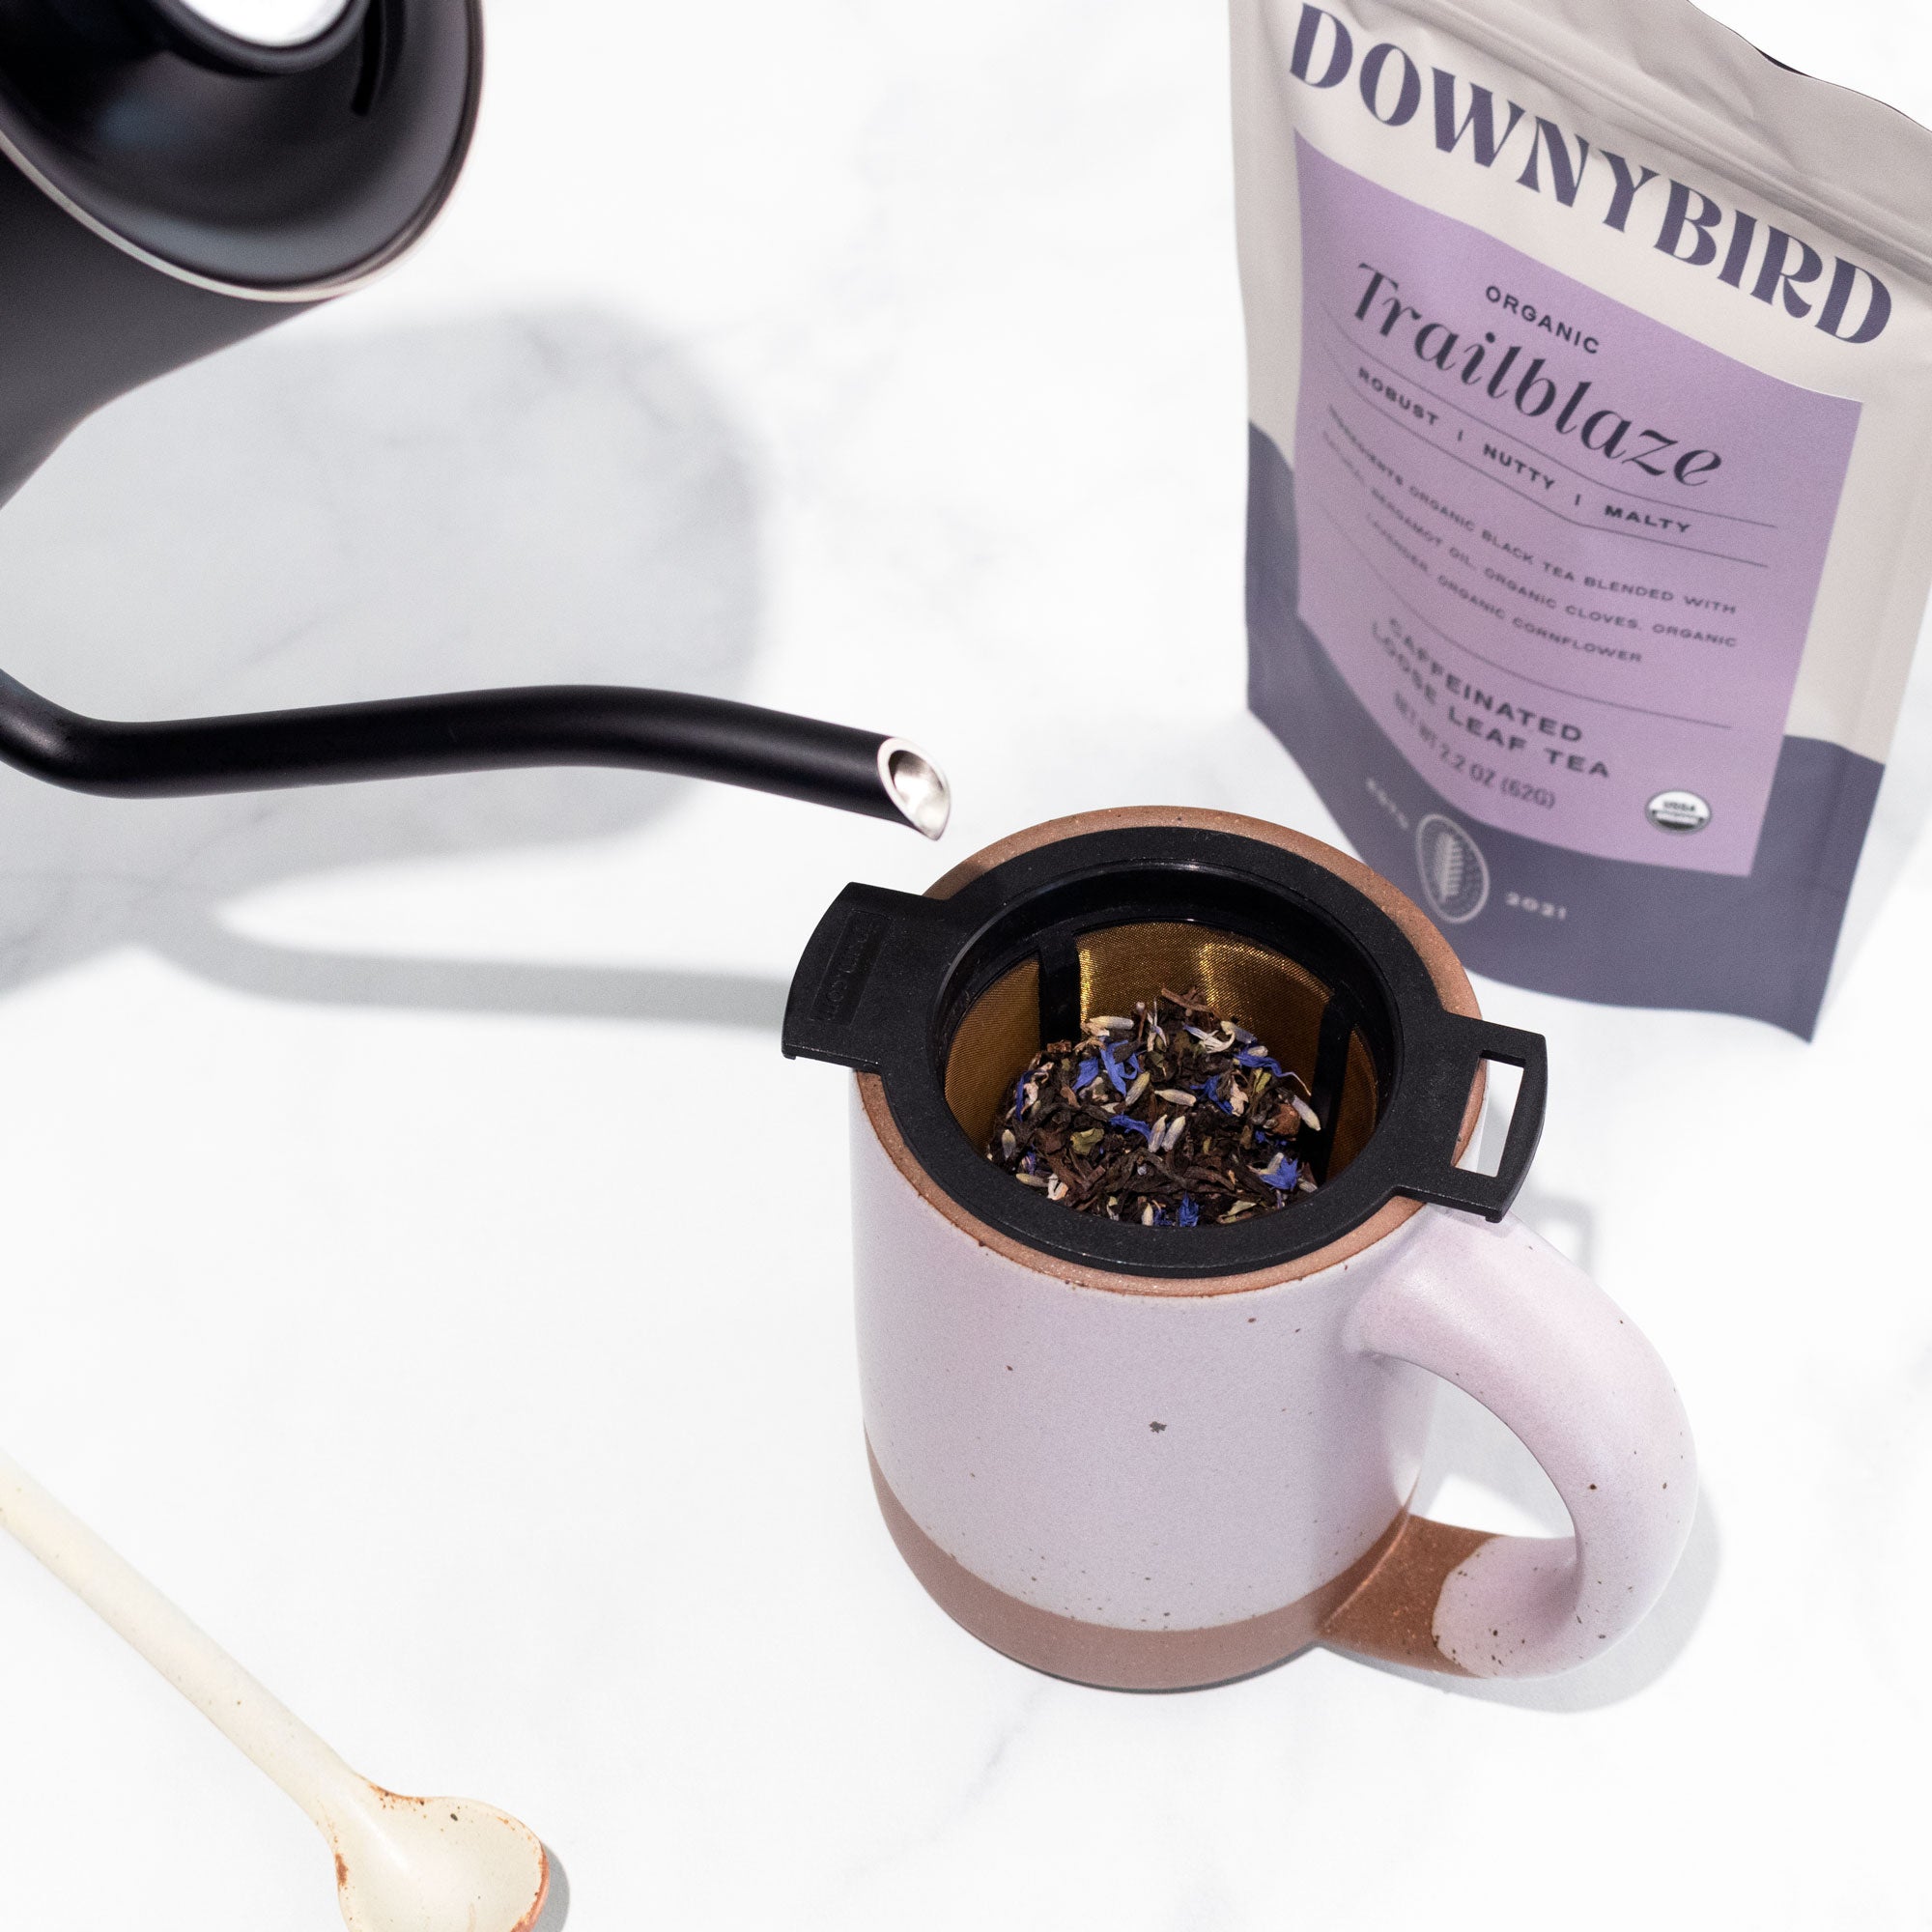 Finum Reusable Tea Brewing Basket with Downybird Trailblaze Organic Earl Grey Loose Leaf Tea Steeping in Mug